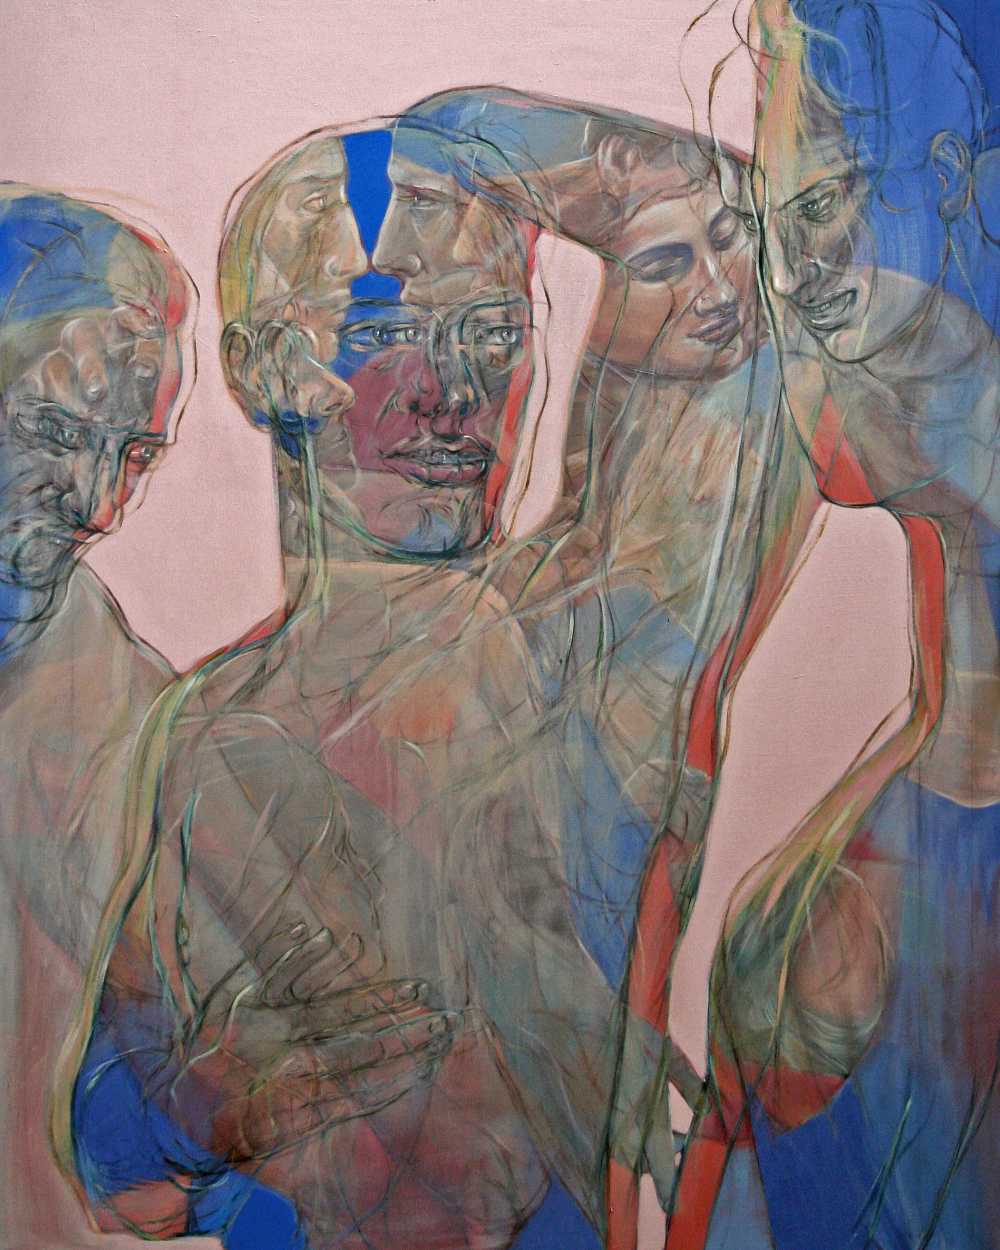 Narziss, 2016, Oil on linen, 150 x 120 cm, Antike Dispositionen, artfein GALLERY, Henri Deparade